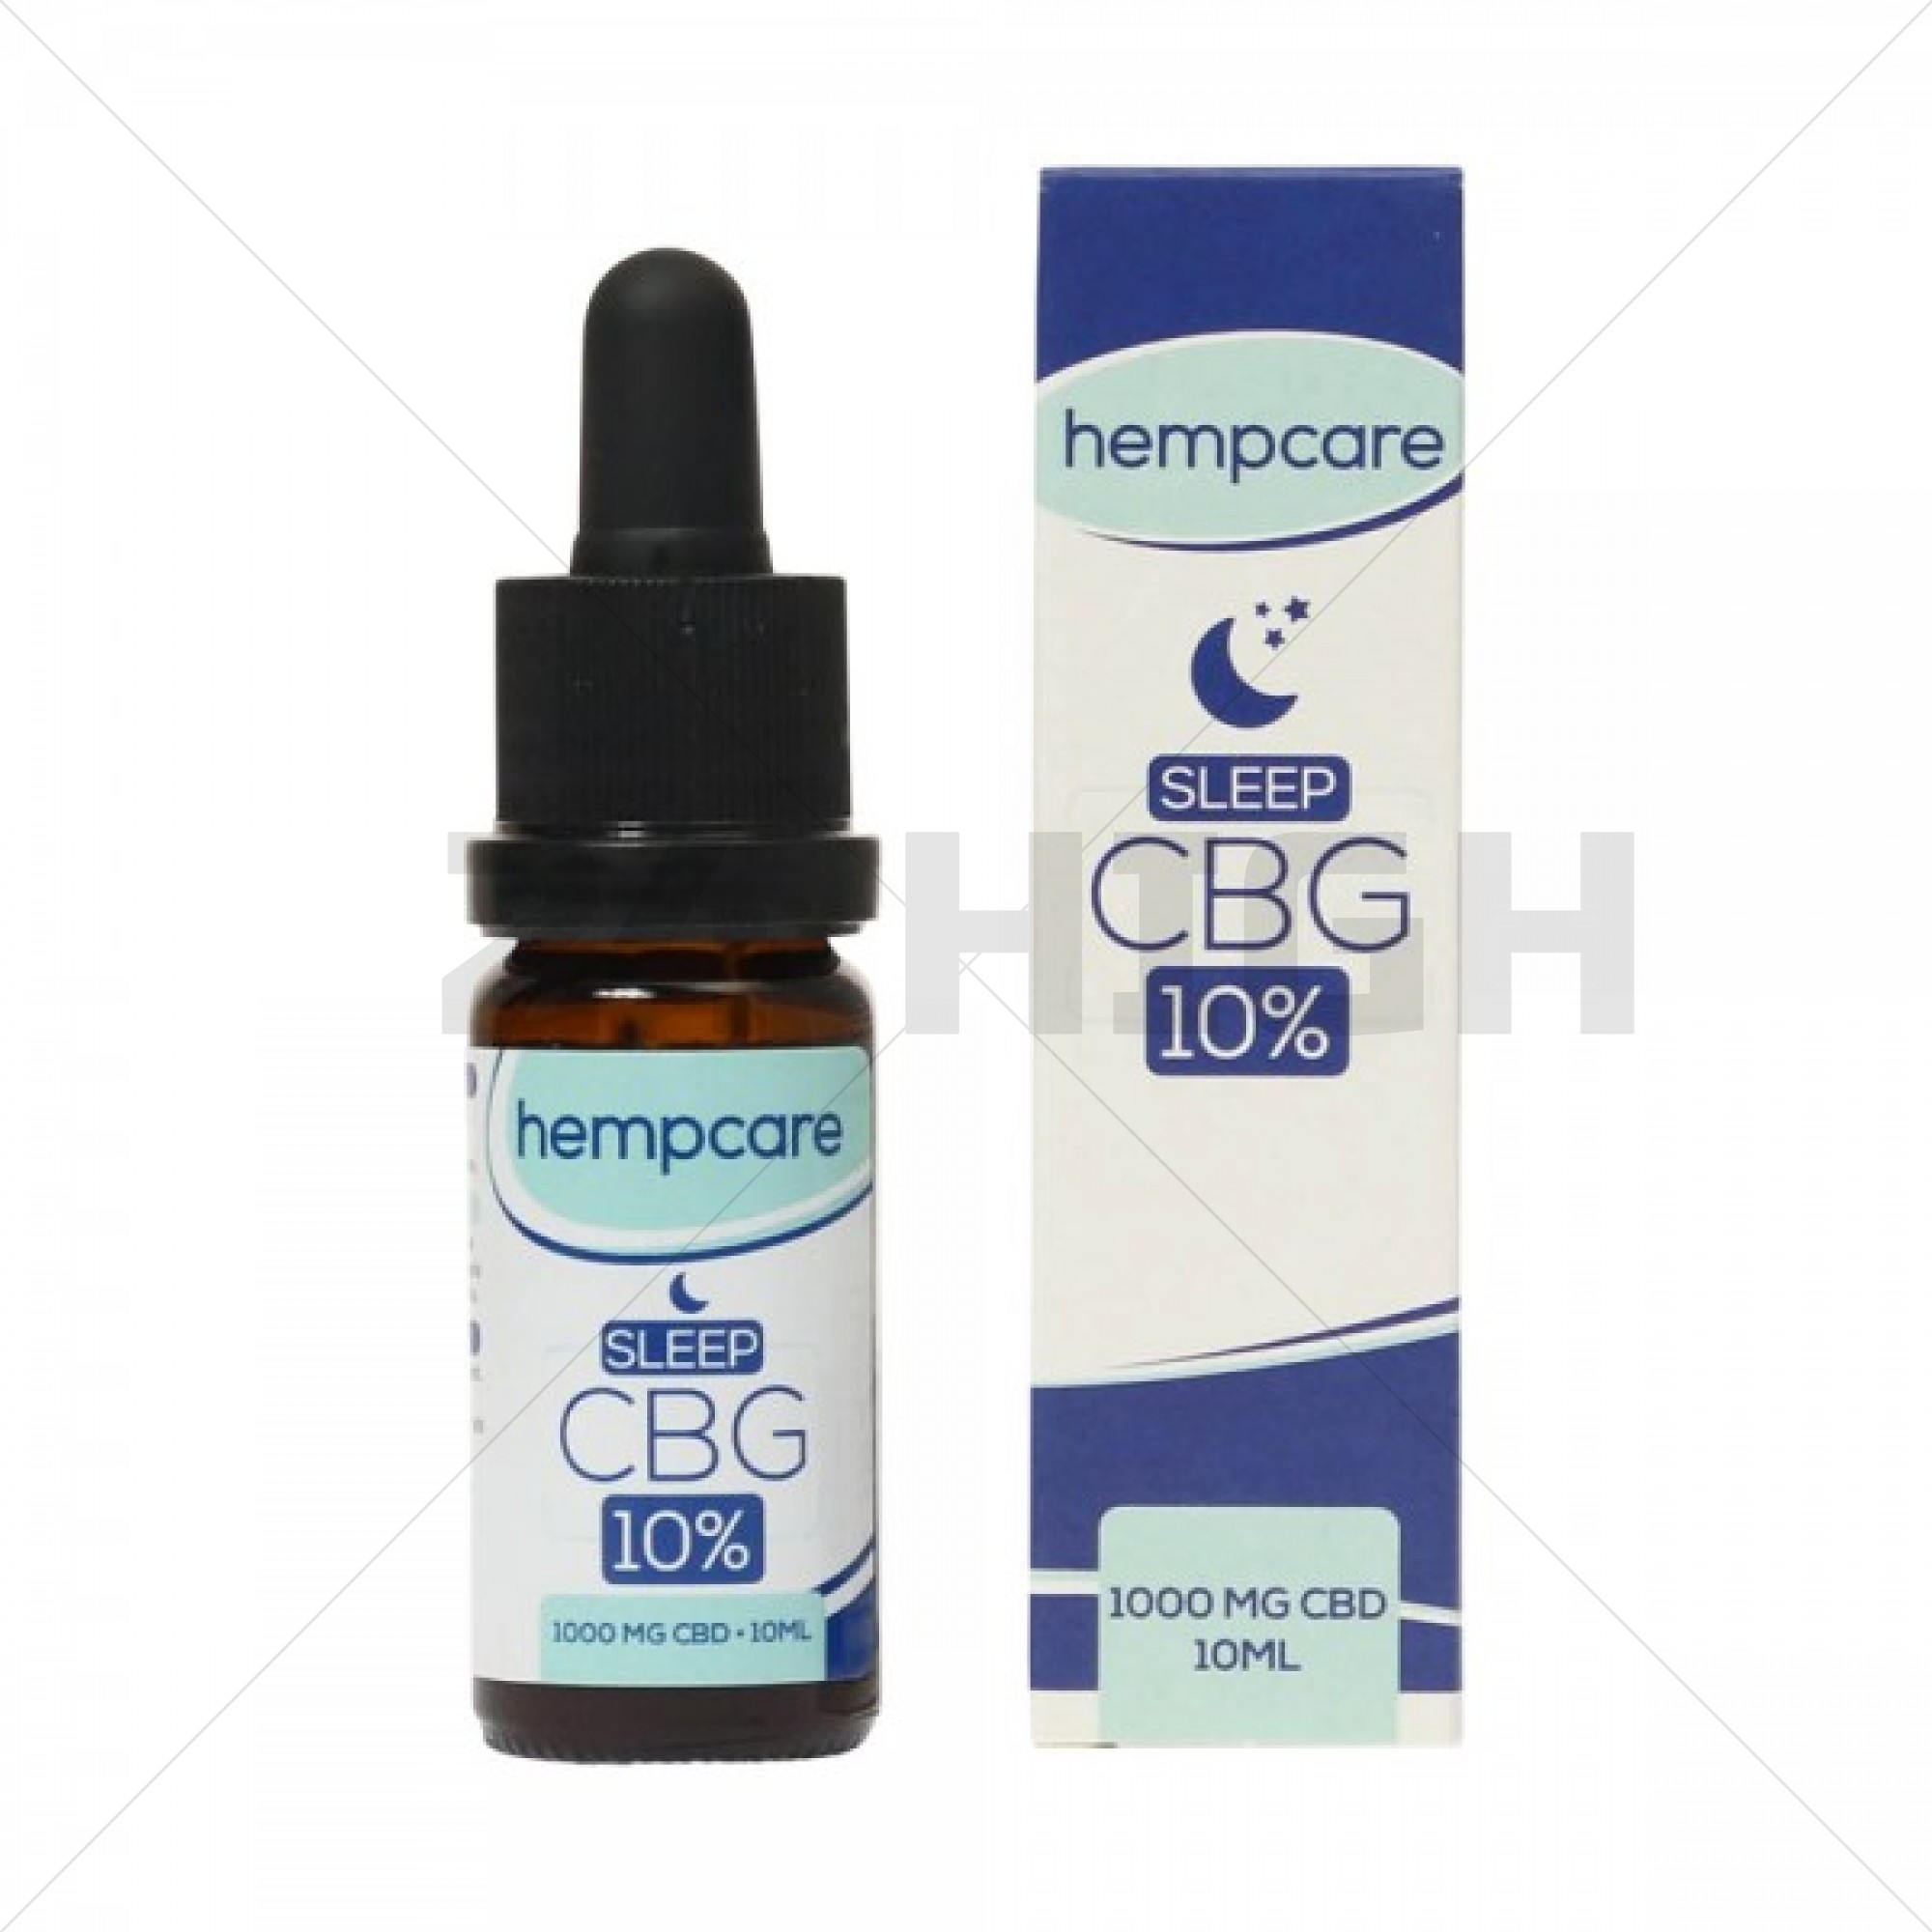 HempCare Sleep - 10% CBD (1000mg)